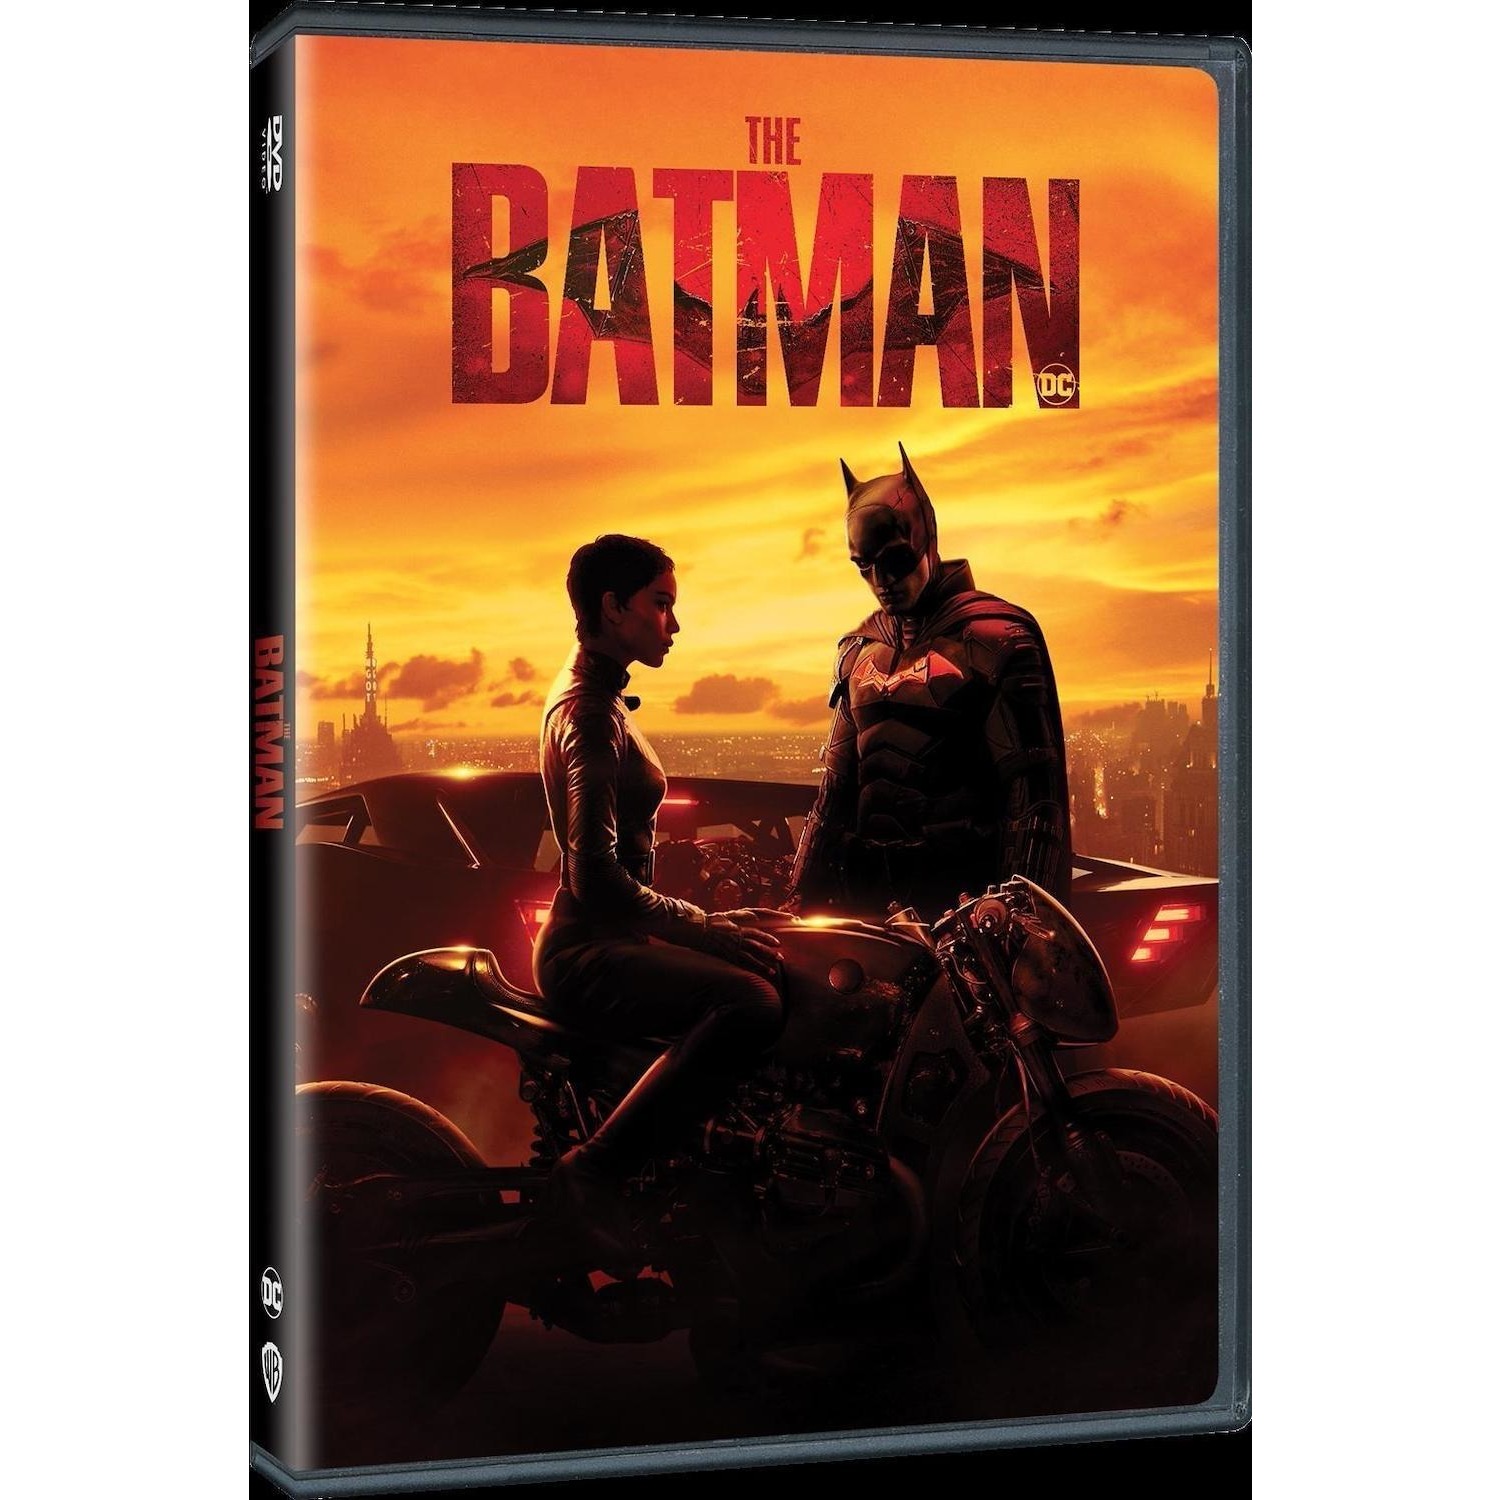 Immagine per DVD The Batman da DIMOStore